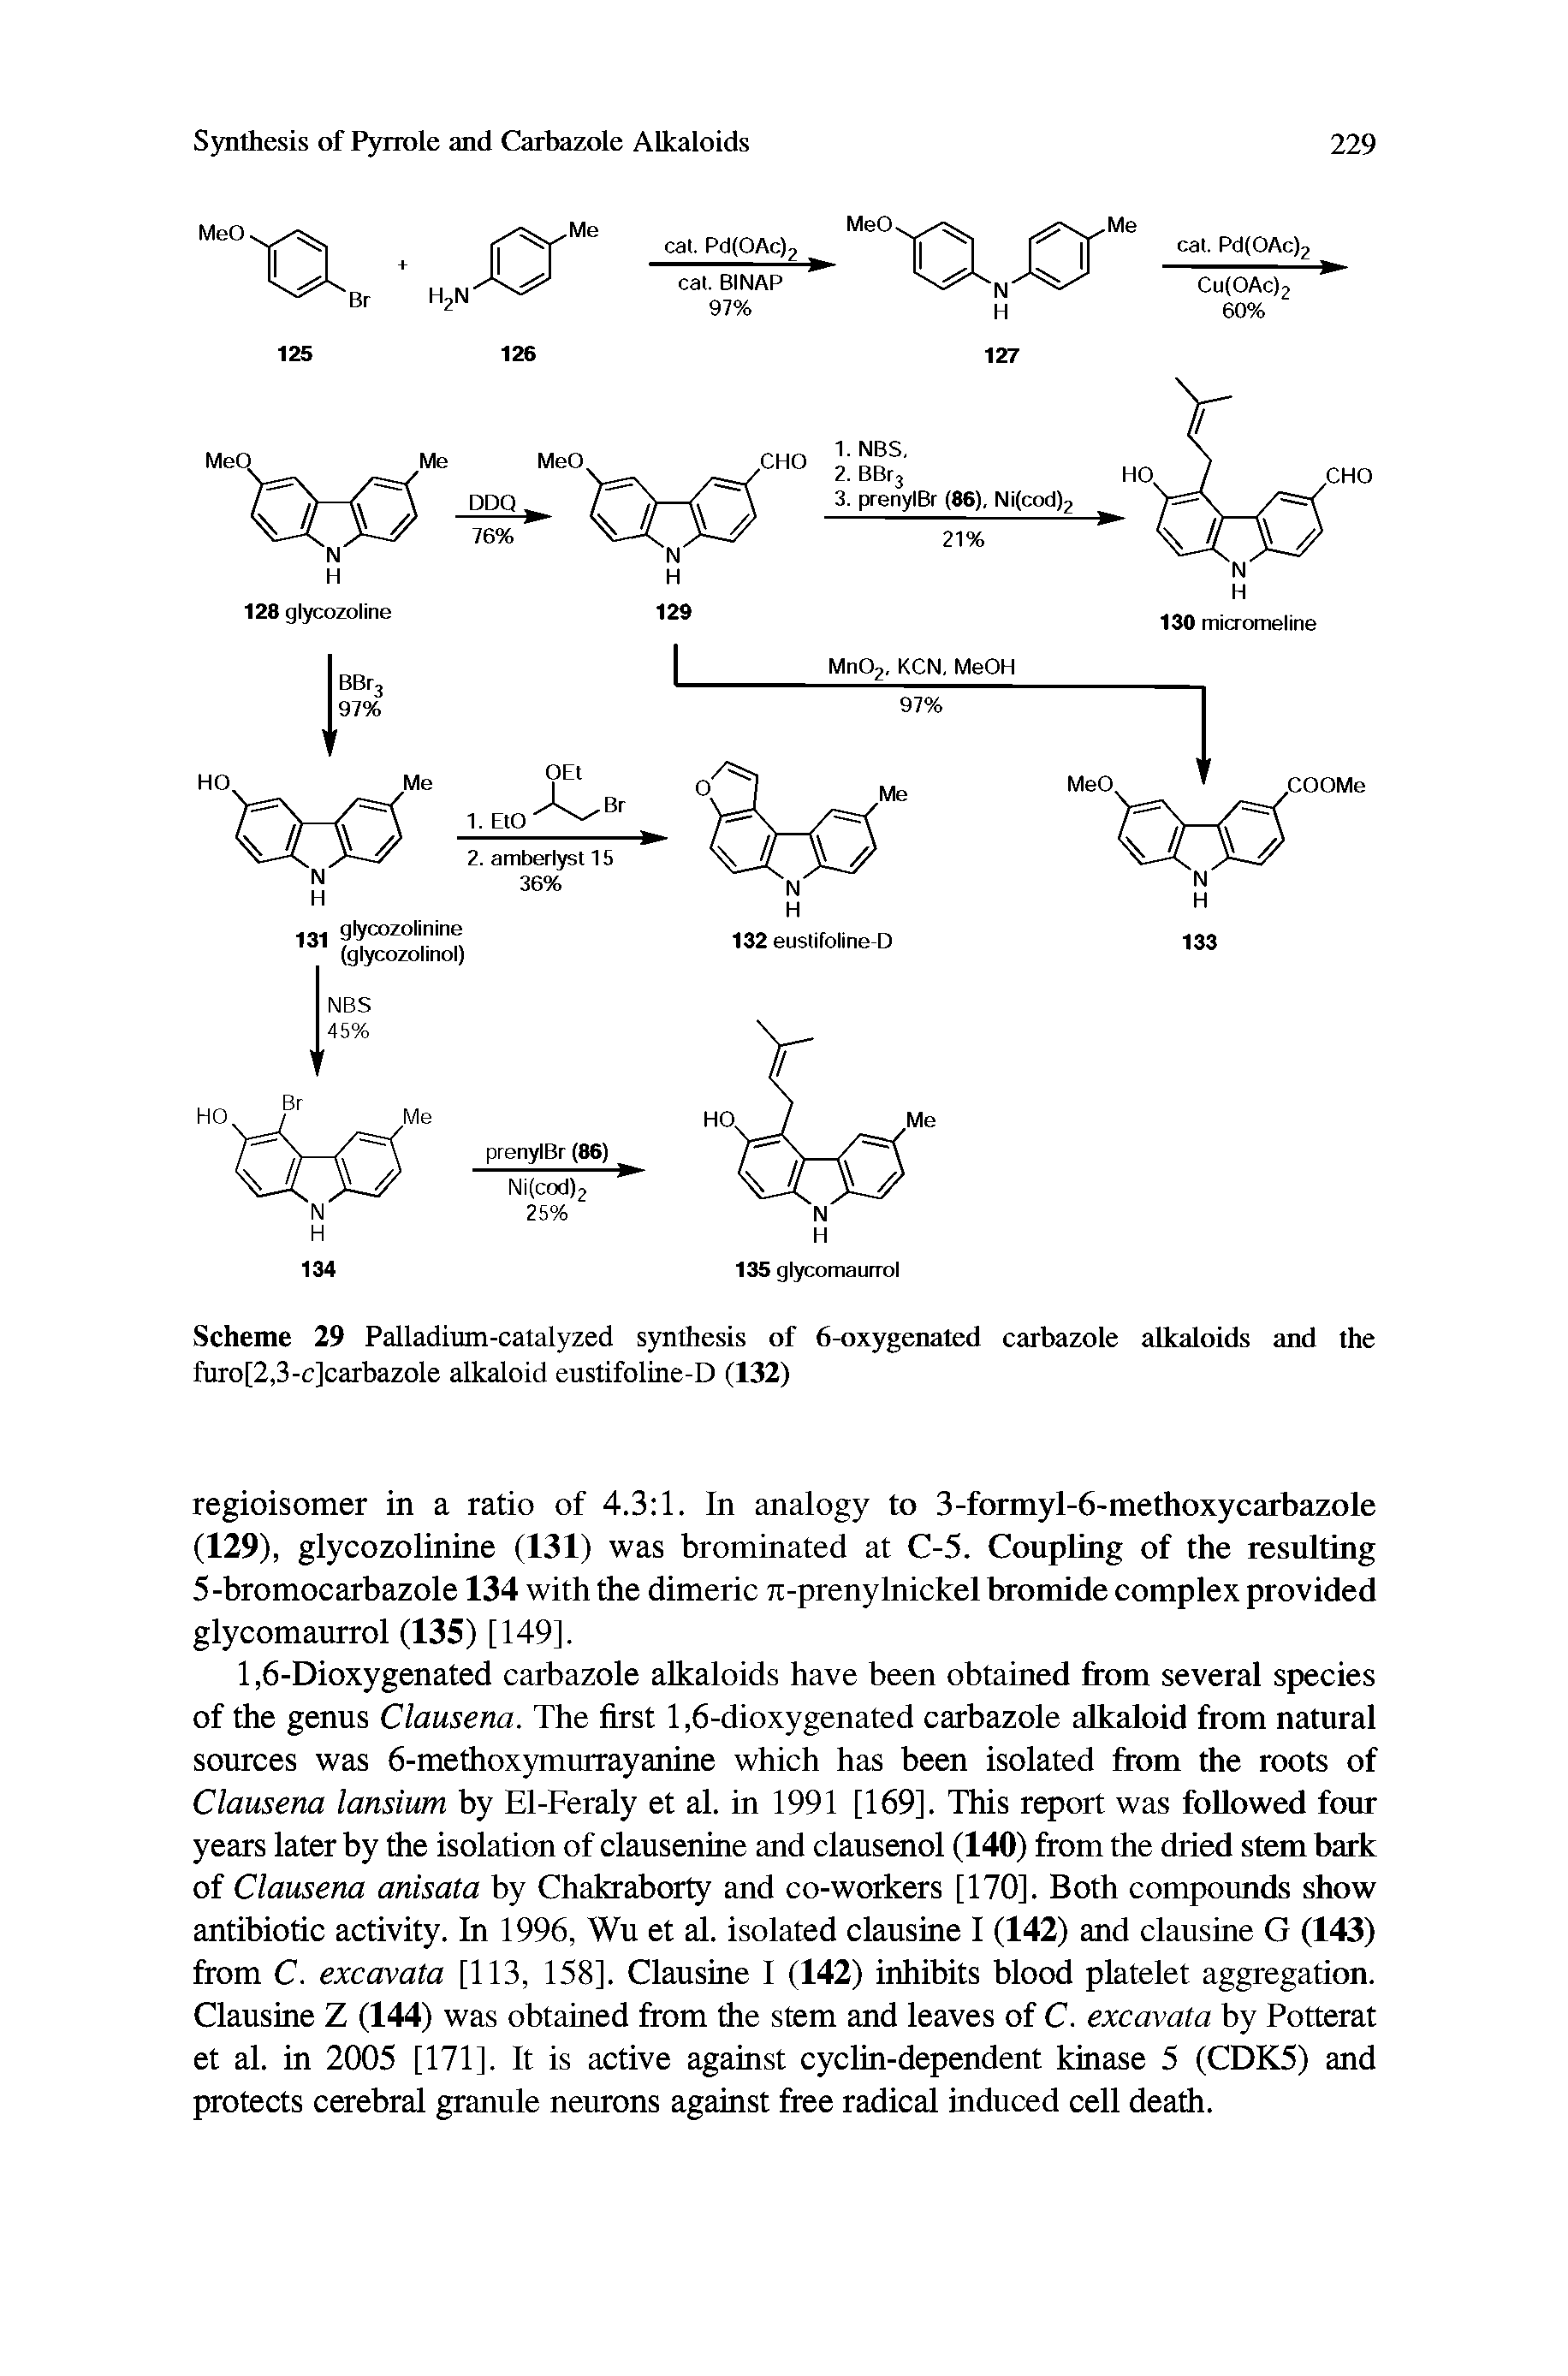 Scheme 29 Palladium-catalyzed synthesis of 6-oxygenated carbazole alkaloids and the furo[2,3-c]carbazole alkaloid eustifoline-D (132)...